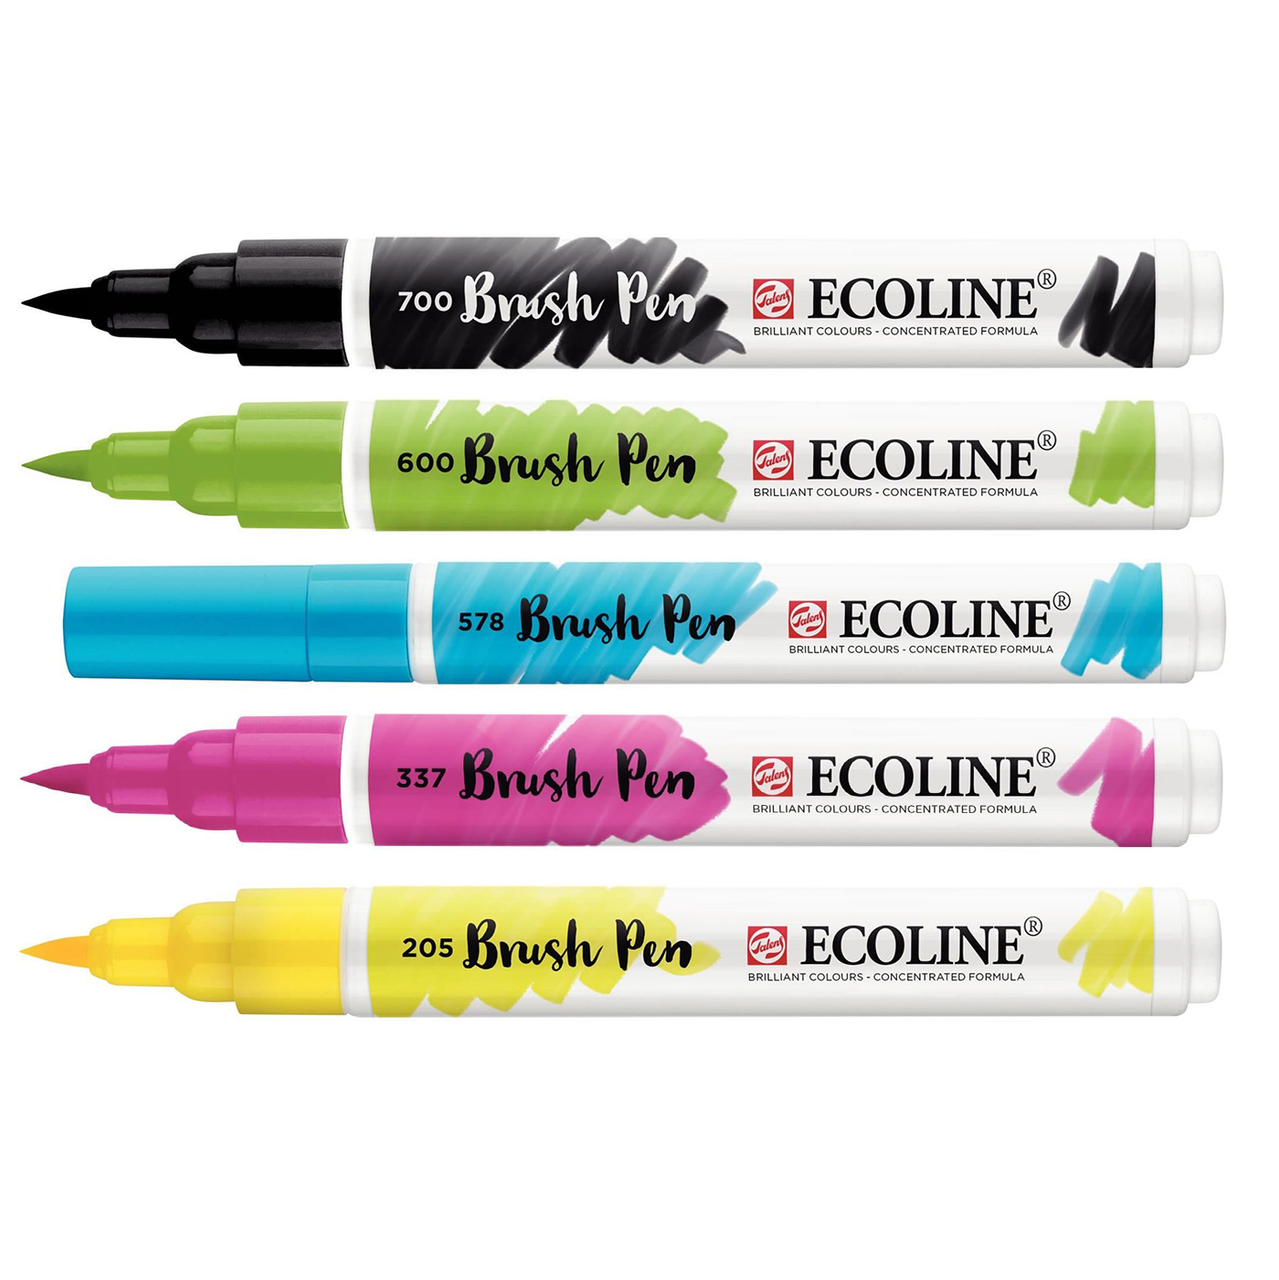 Ecoline brush pen review